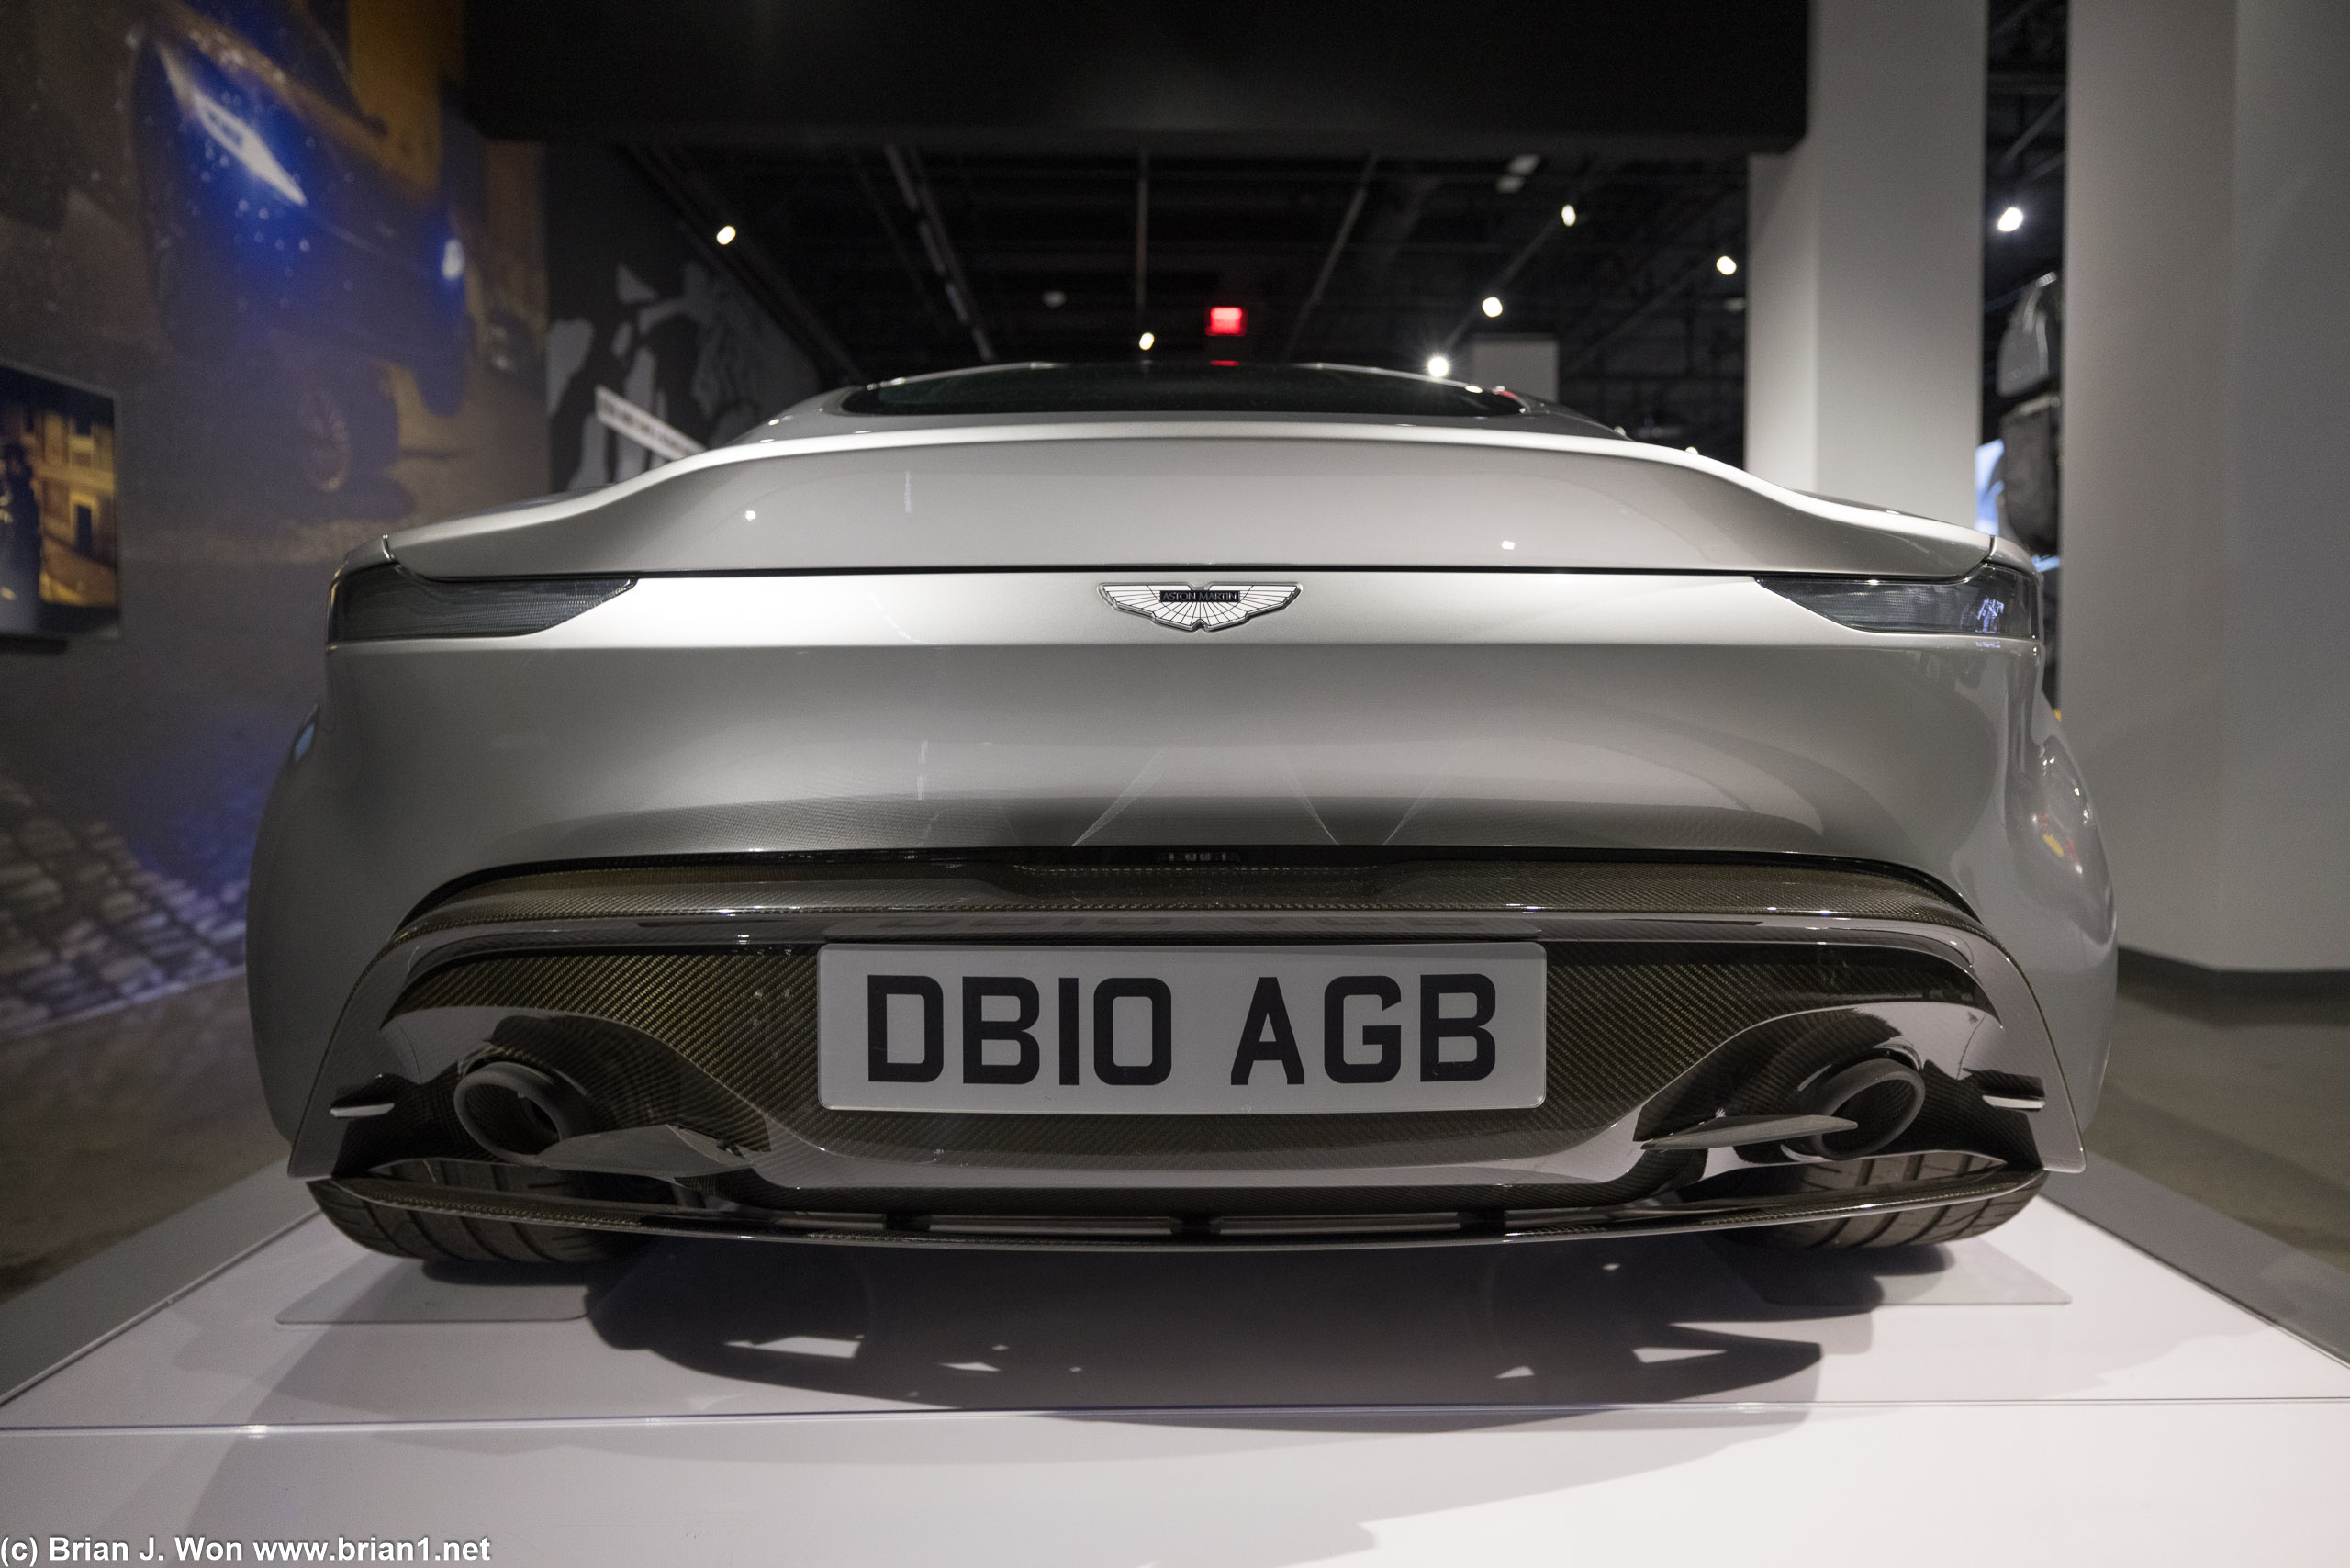 Aston Martin DB10 from Spectre.